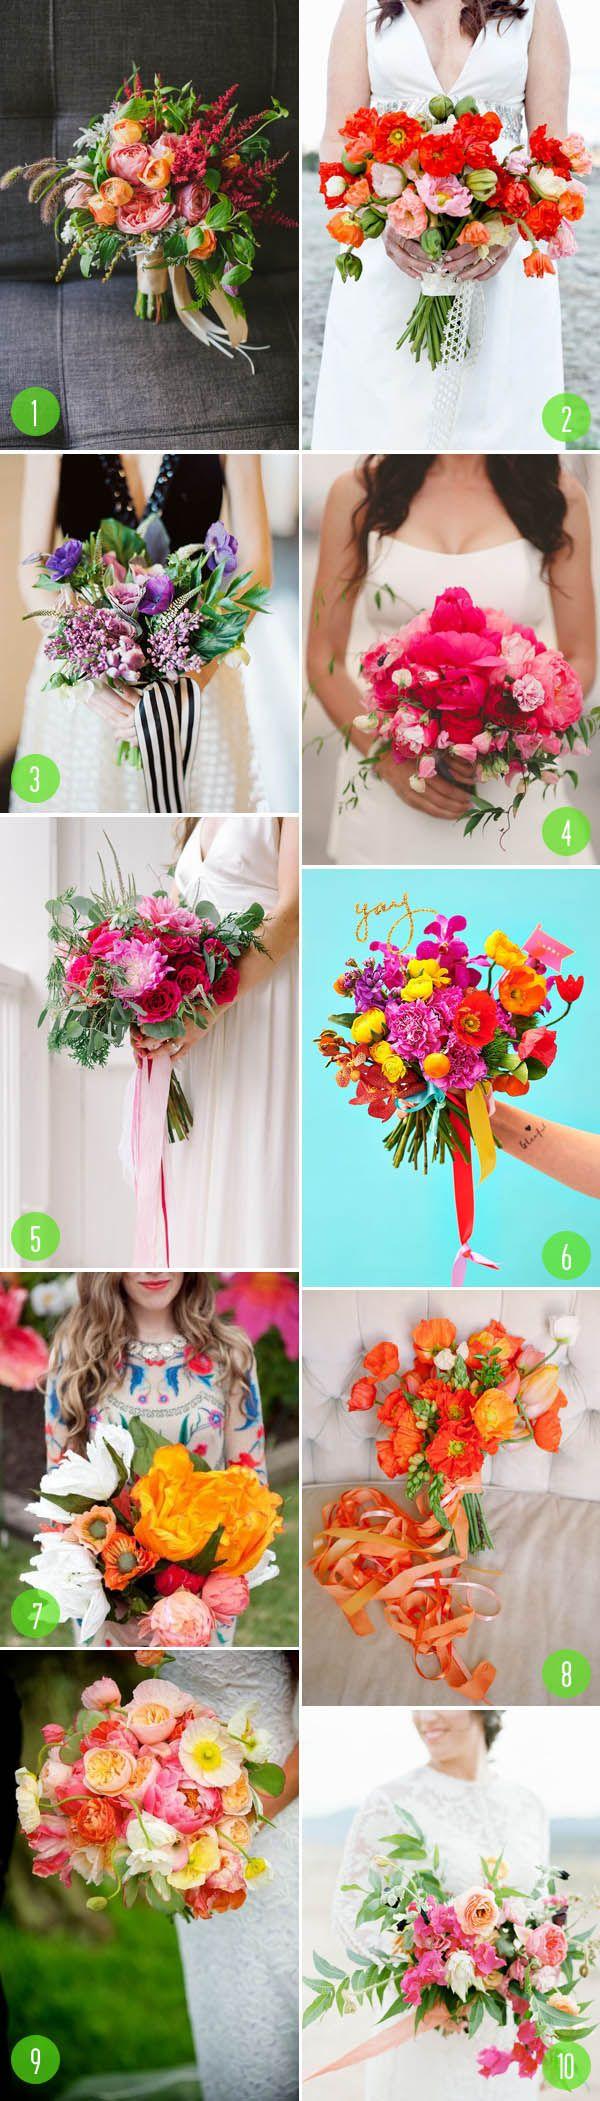 Wedding - Top 10: Bright Bouquets